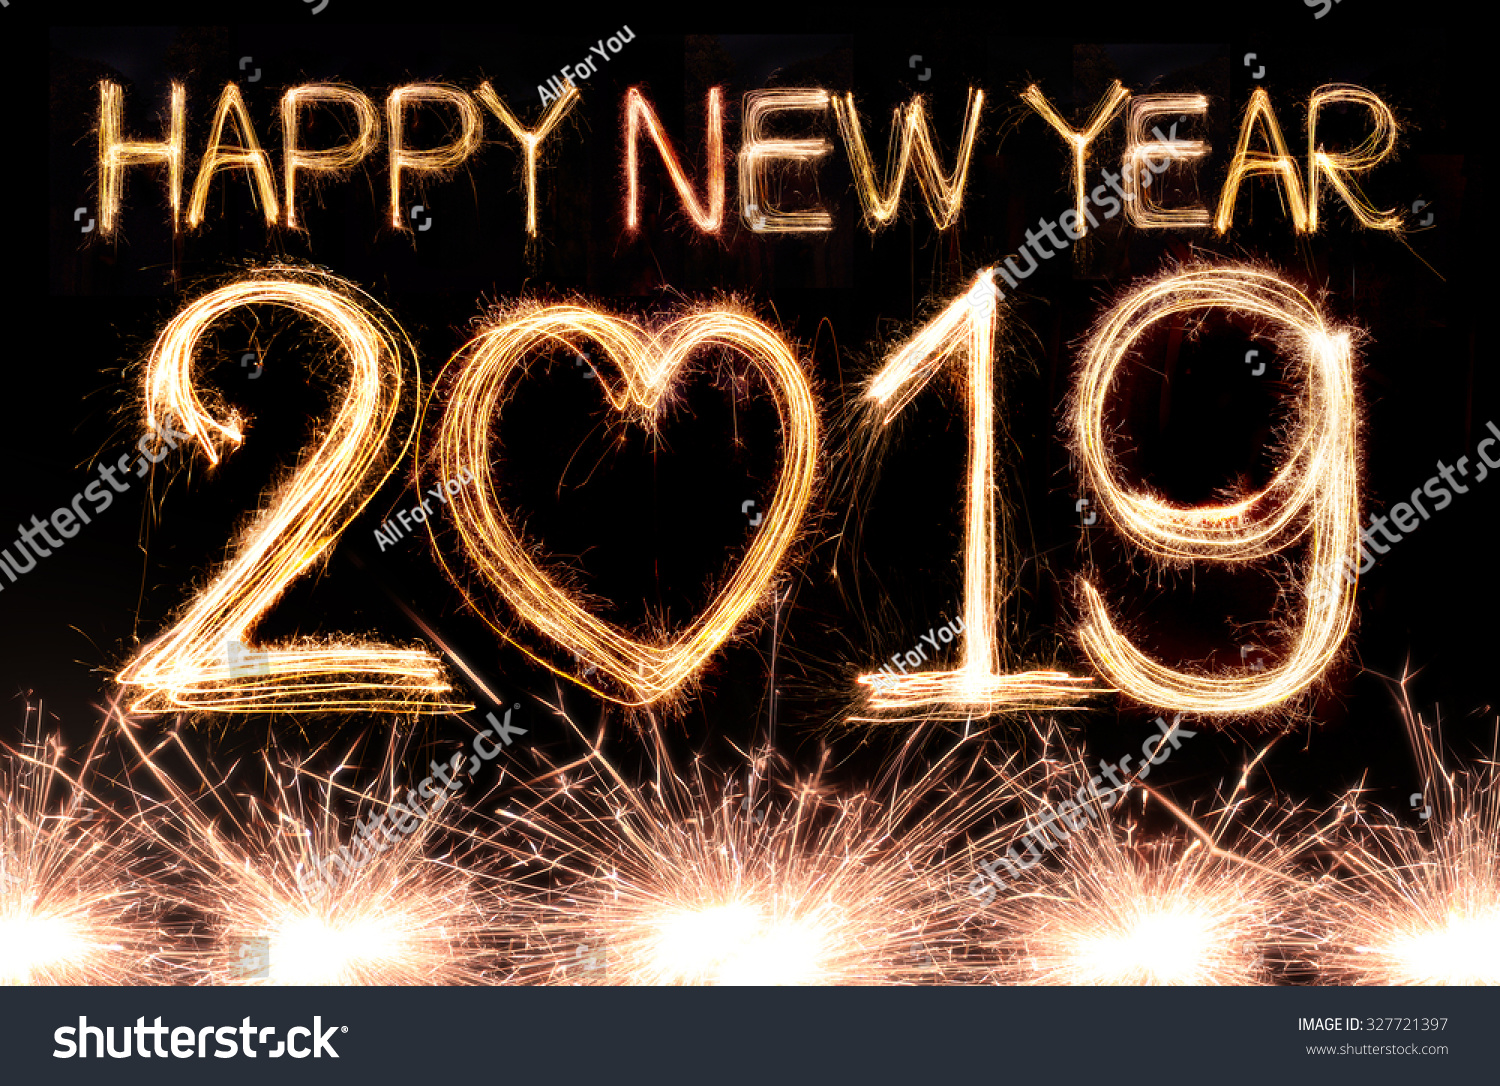 Royaltyfree Happy new year 2019 written with\u2026 327721397 Stock Photo  Avopix.com